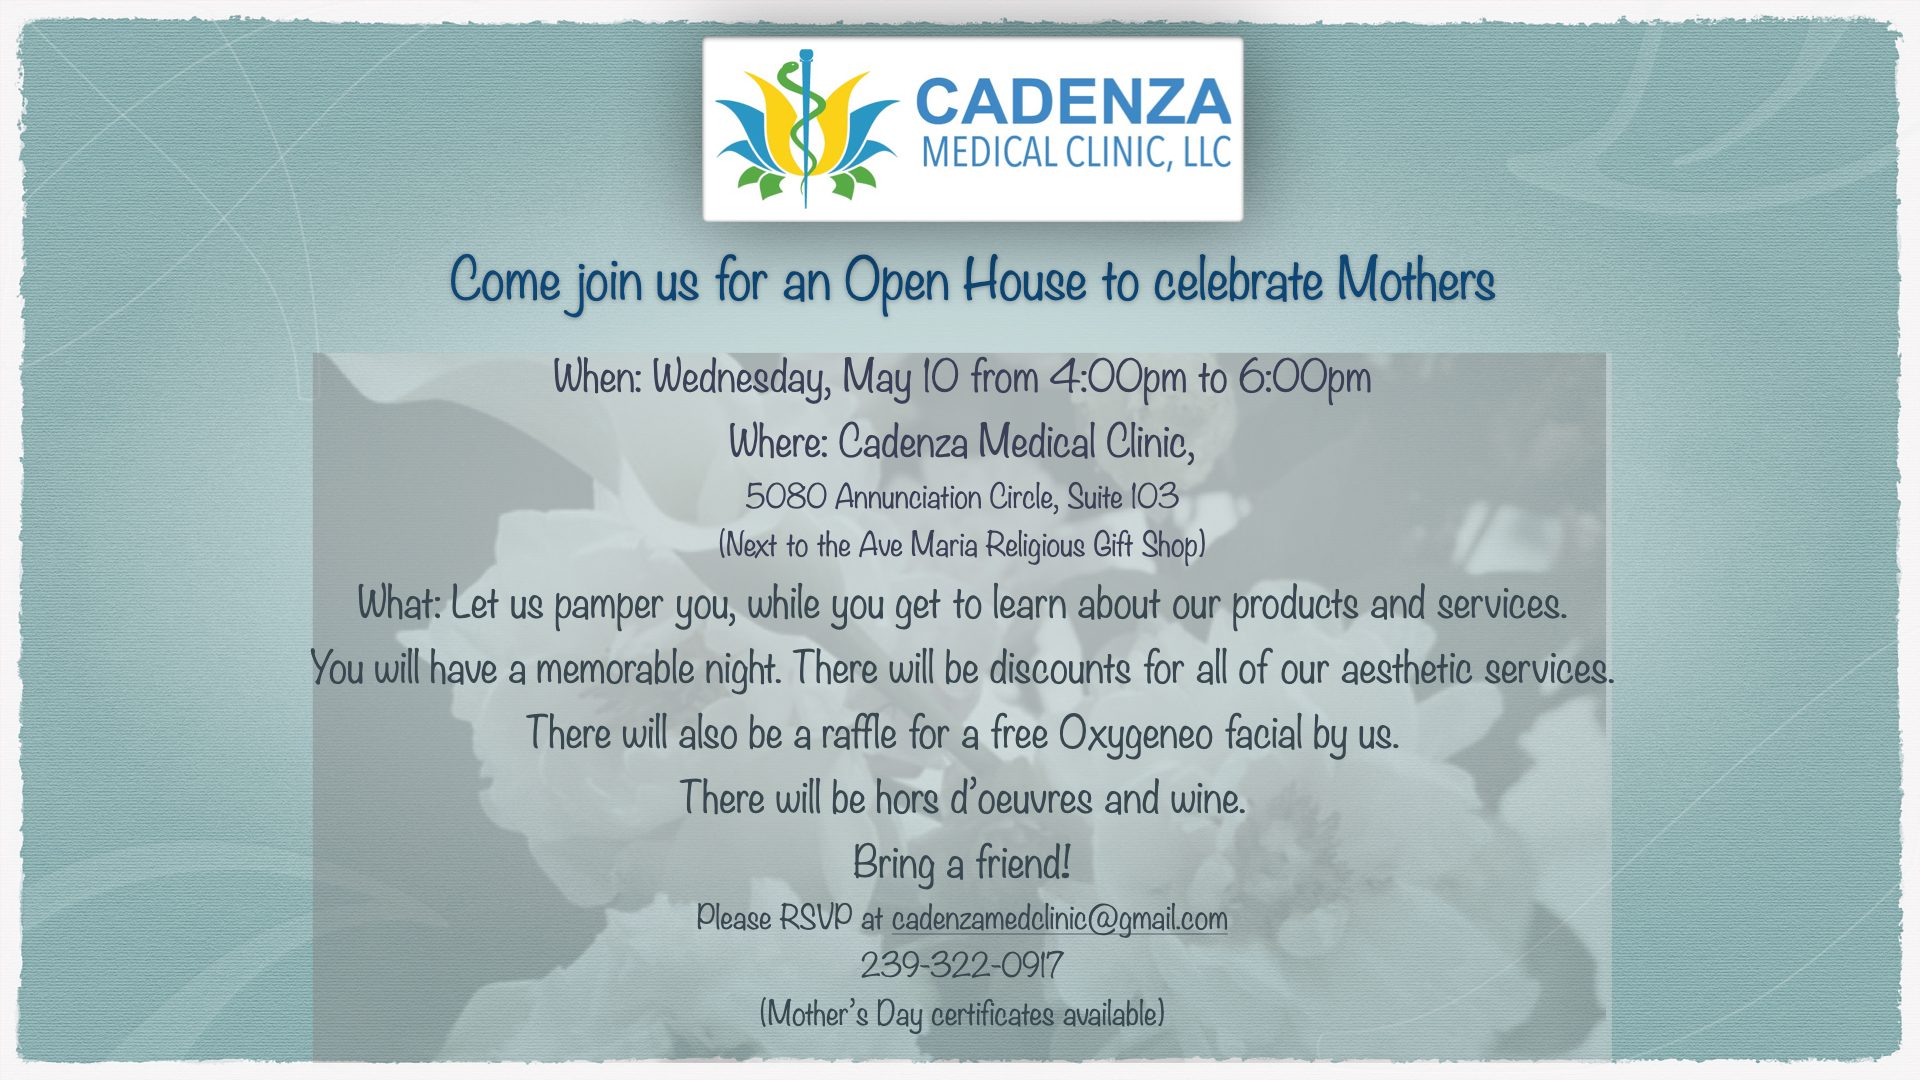 Cadenza Medical Clinic Open House Flyer